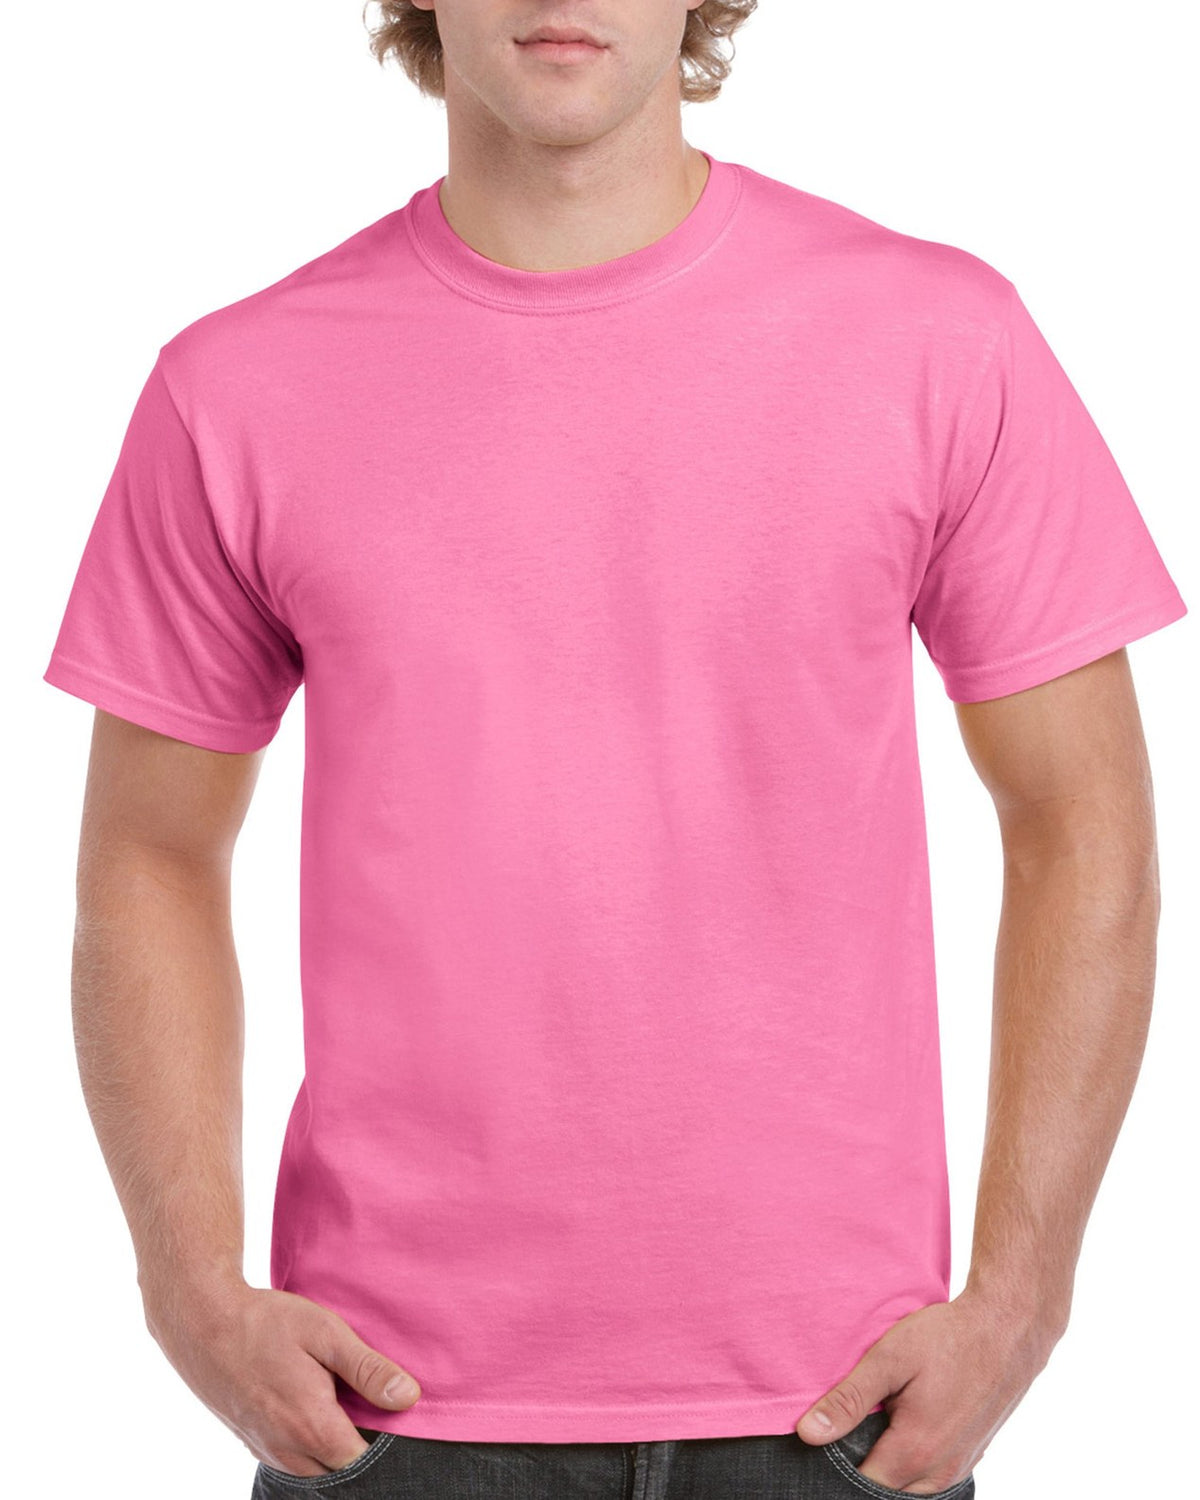 Tie Dye T-Shirt 100% Cotton (Light Pink & Pink)